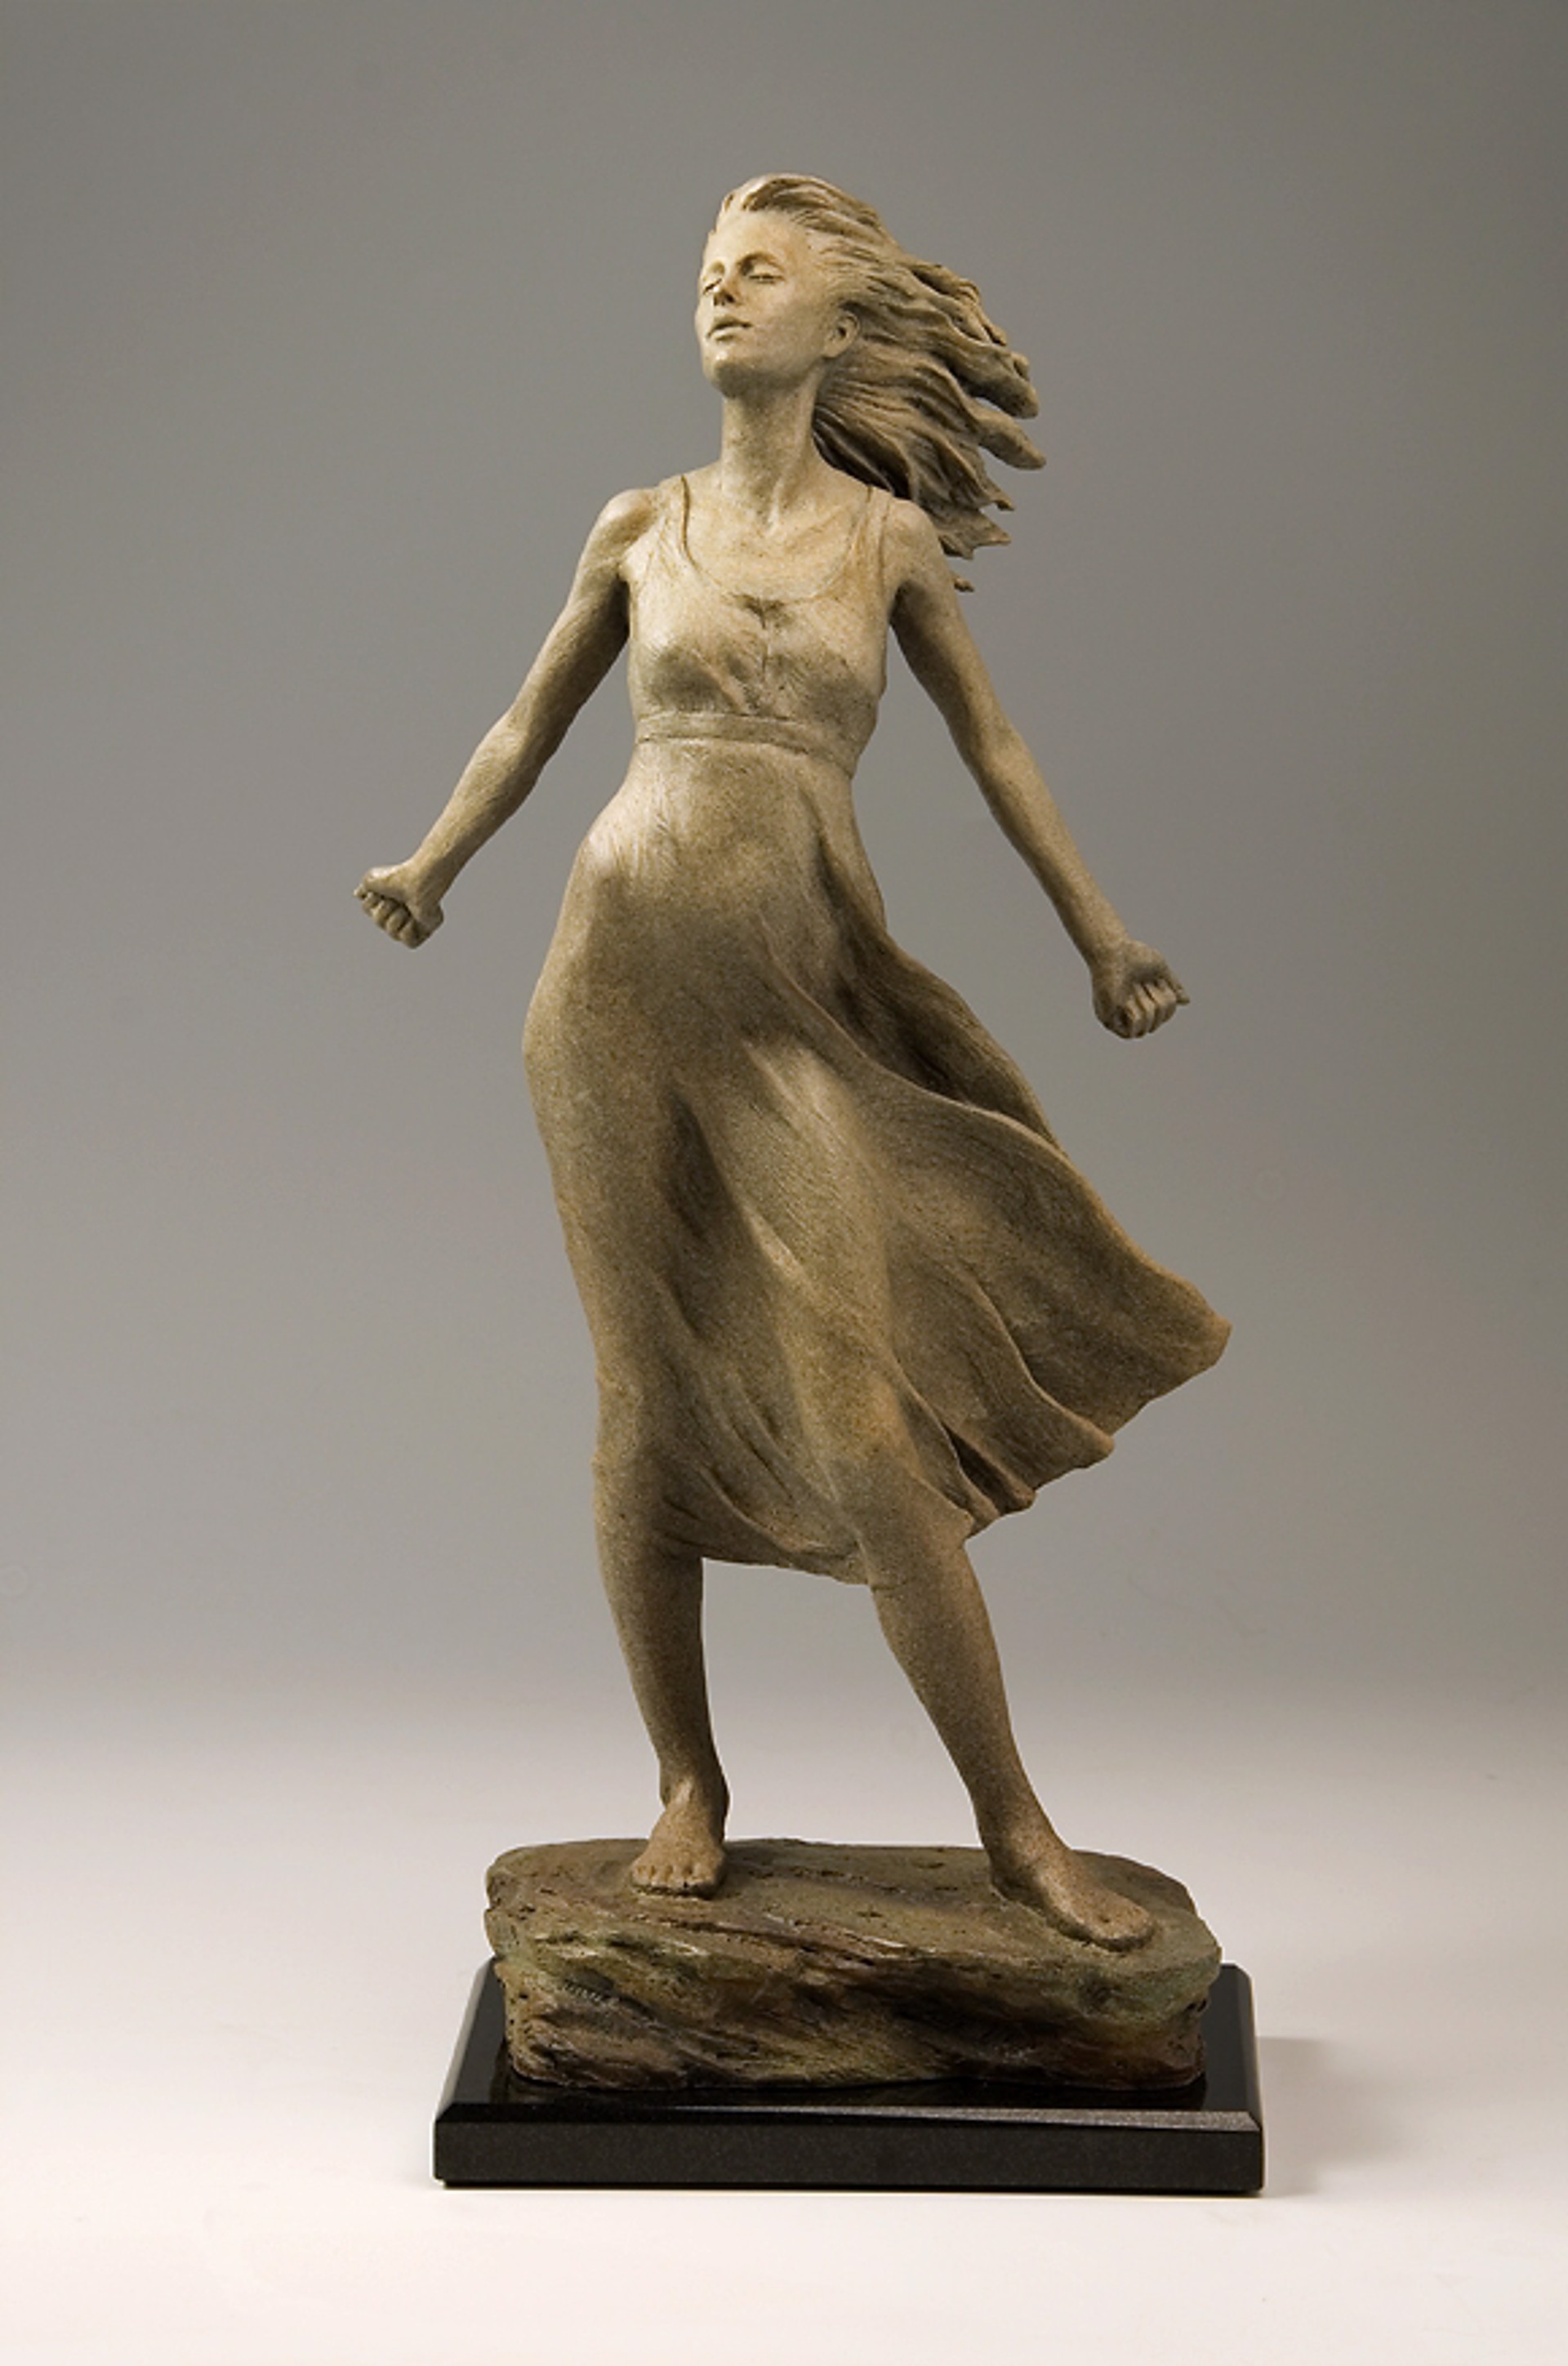 Wind's Embrace maquette by Karl Jensen (sculptor)